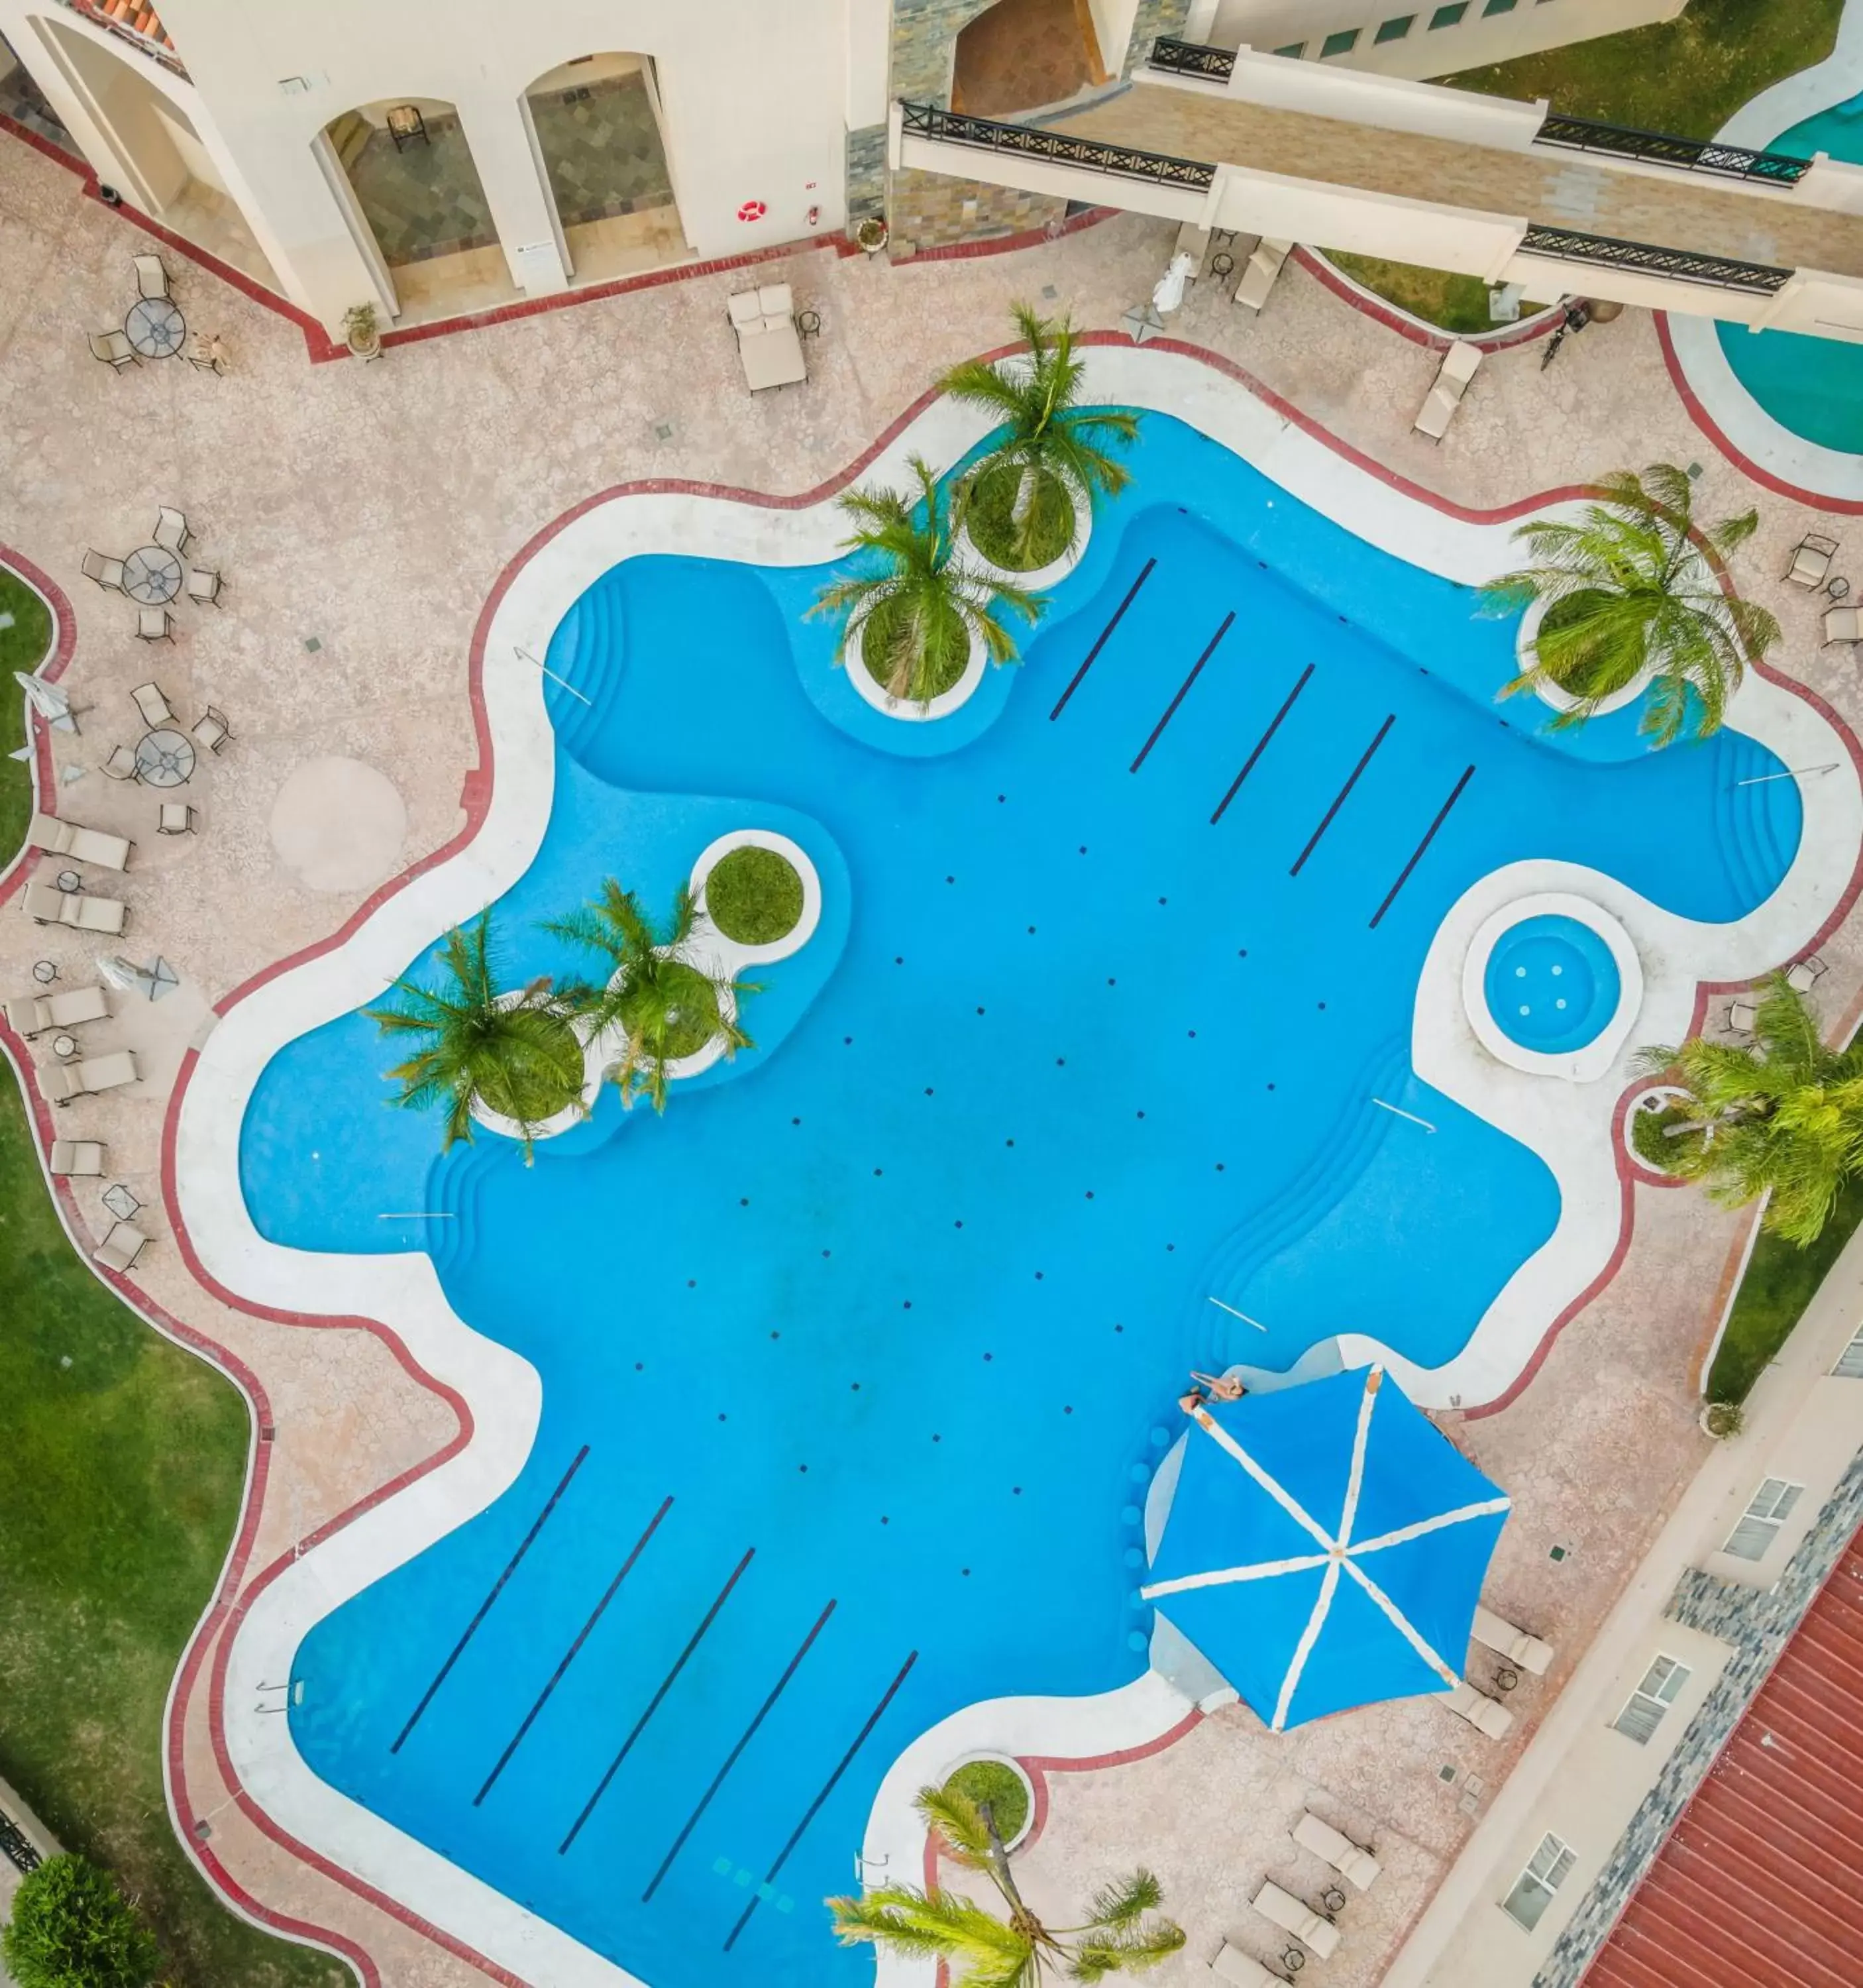 Bird's eye view, Pool View in Azul Talavera Country Club